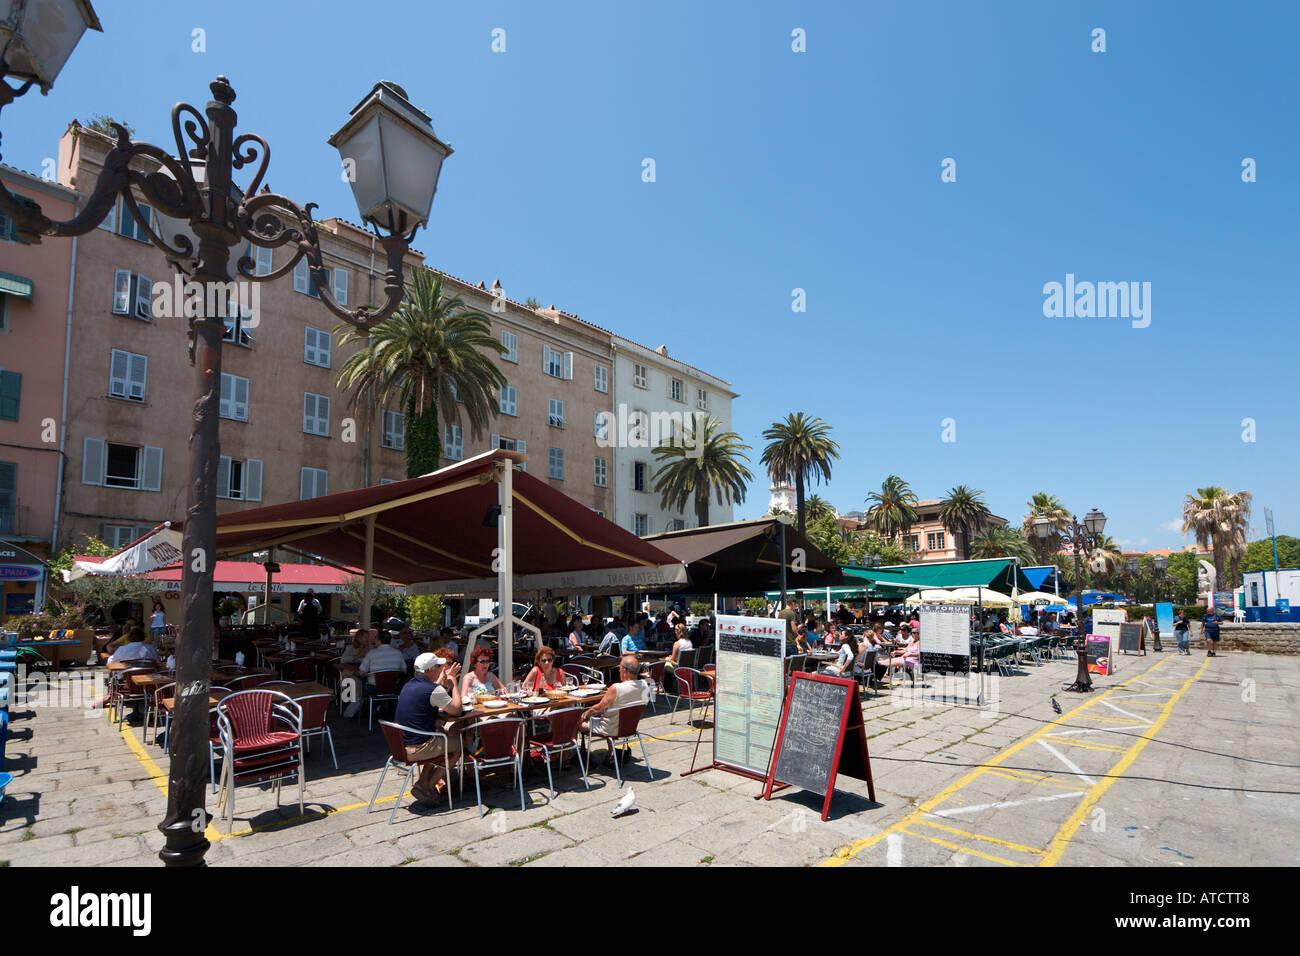 Harbourfront restaurant, Ajaccio, Corsica, France Stock Photo